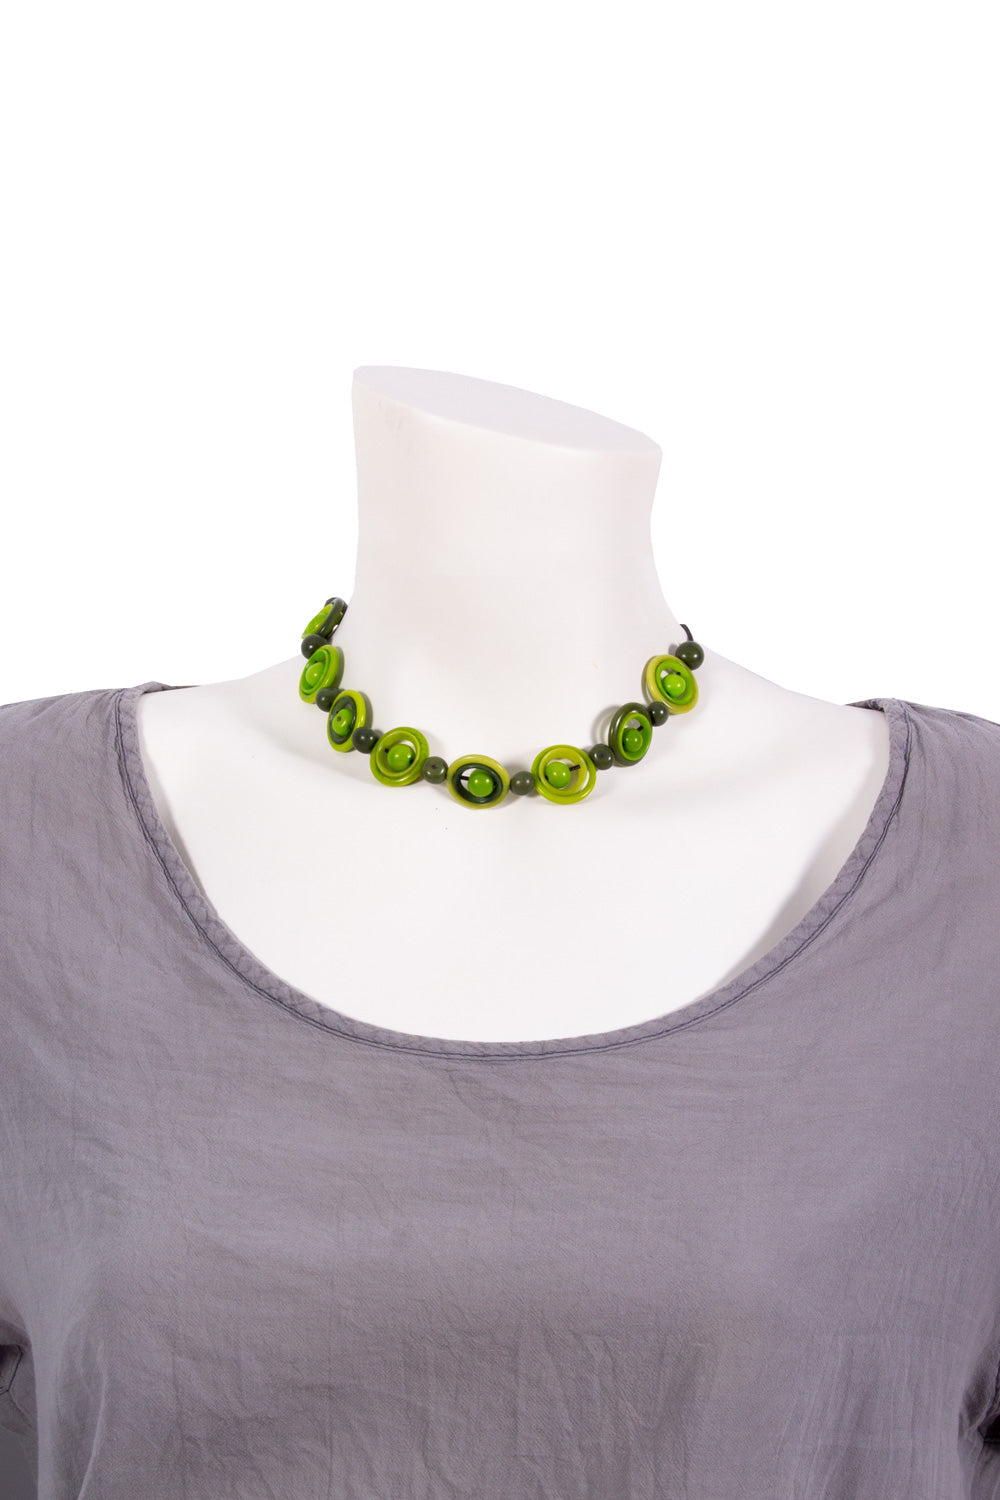 Halskette Lili grün - aus Azai Palmensamen und La Tagua Nuss